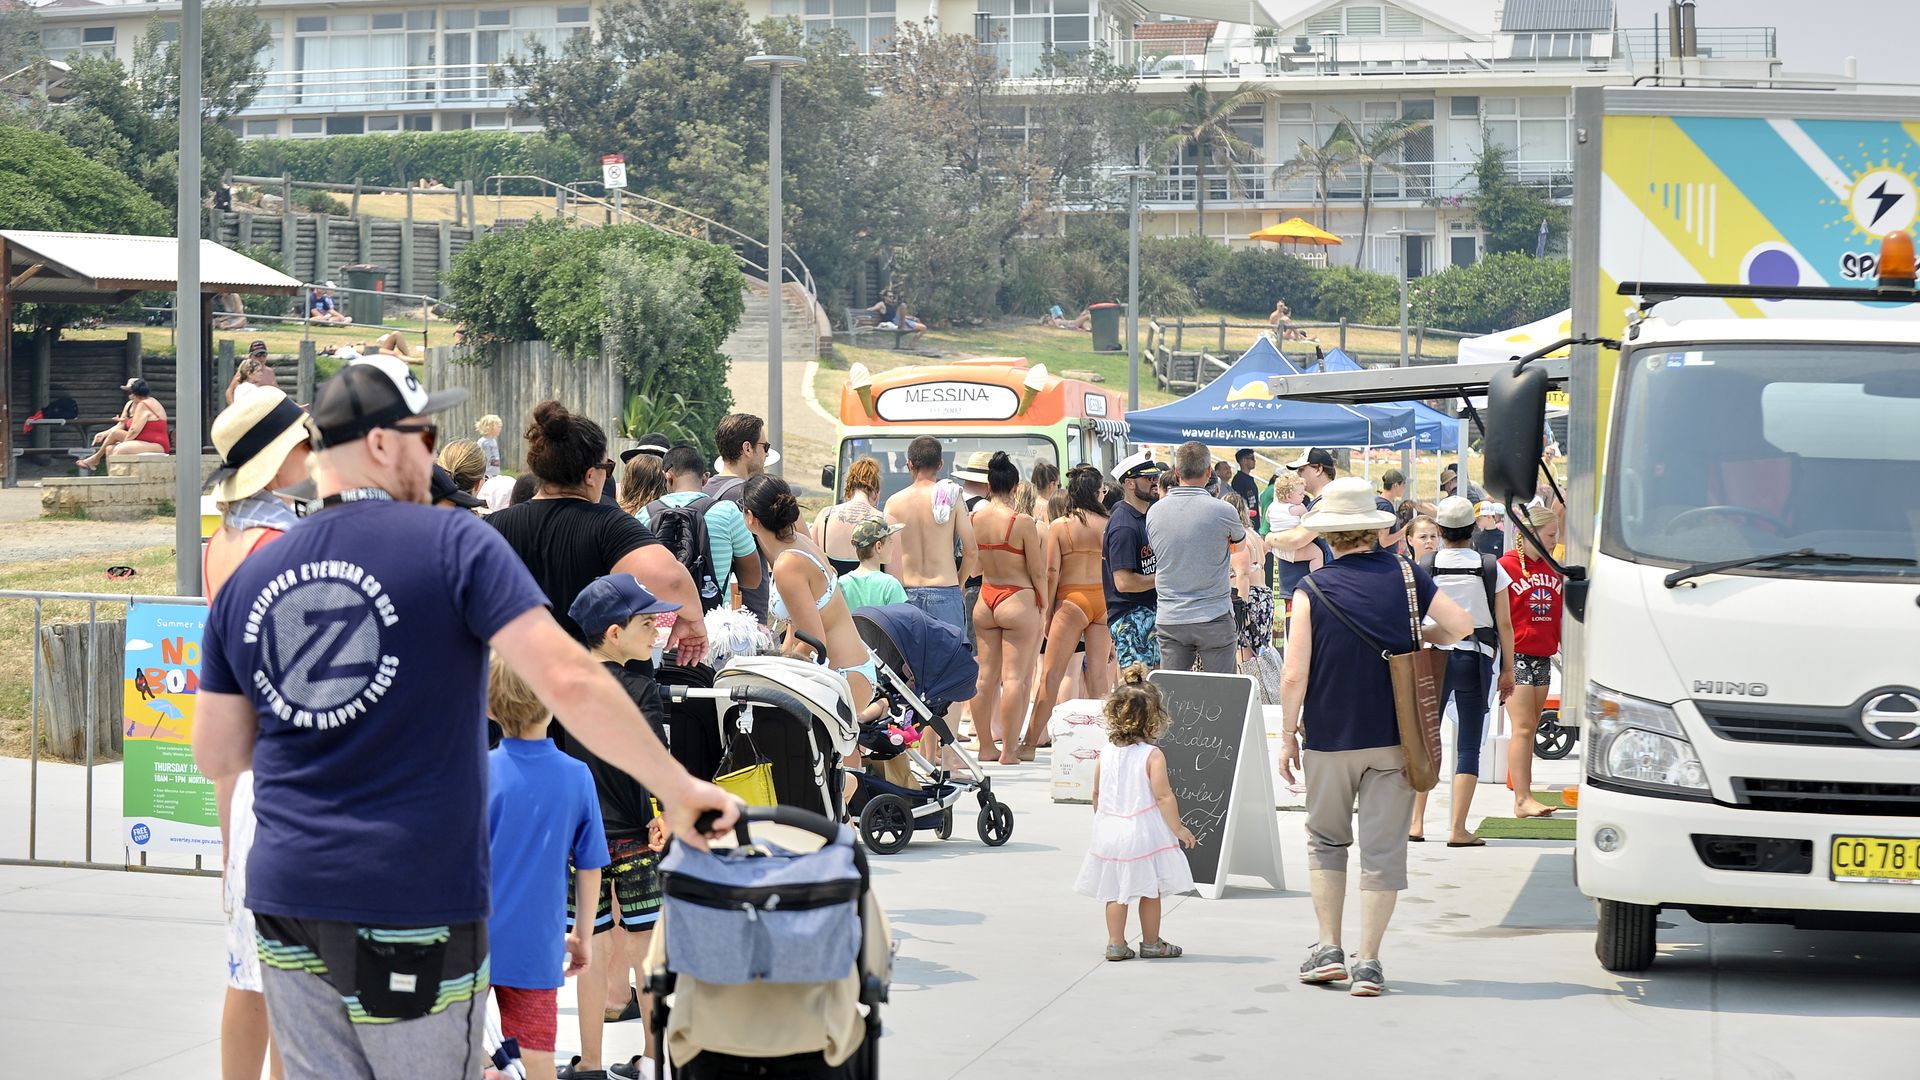  People queue for Ice Cream at Bondi Beach on December 19, 2019 in Sydney